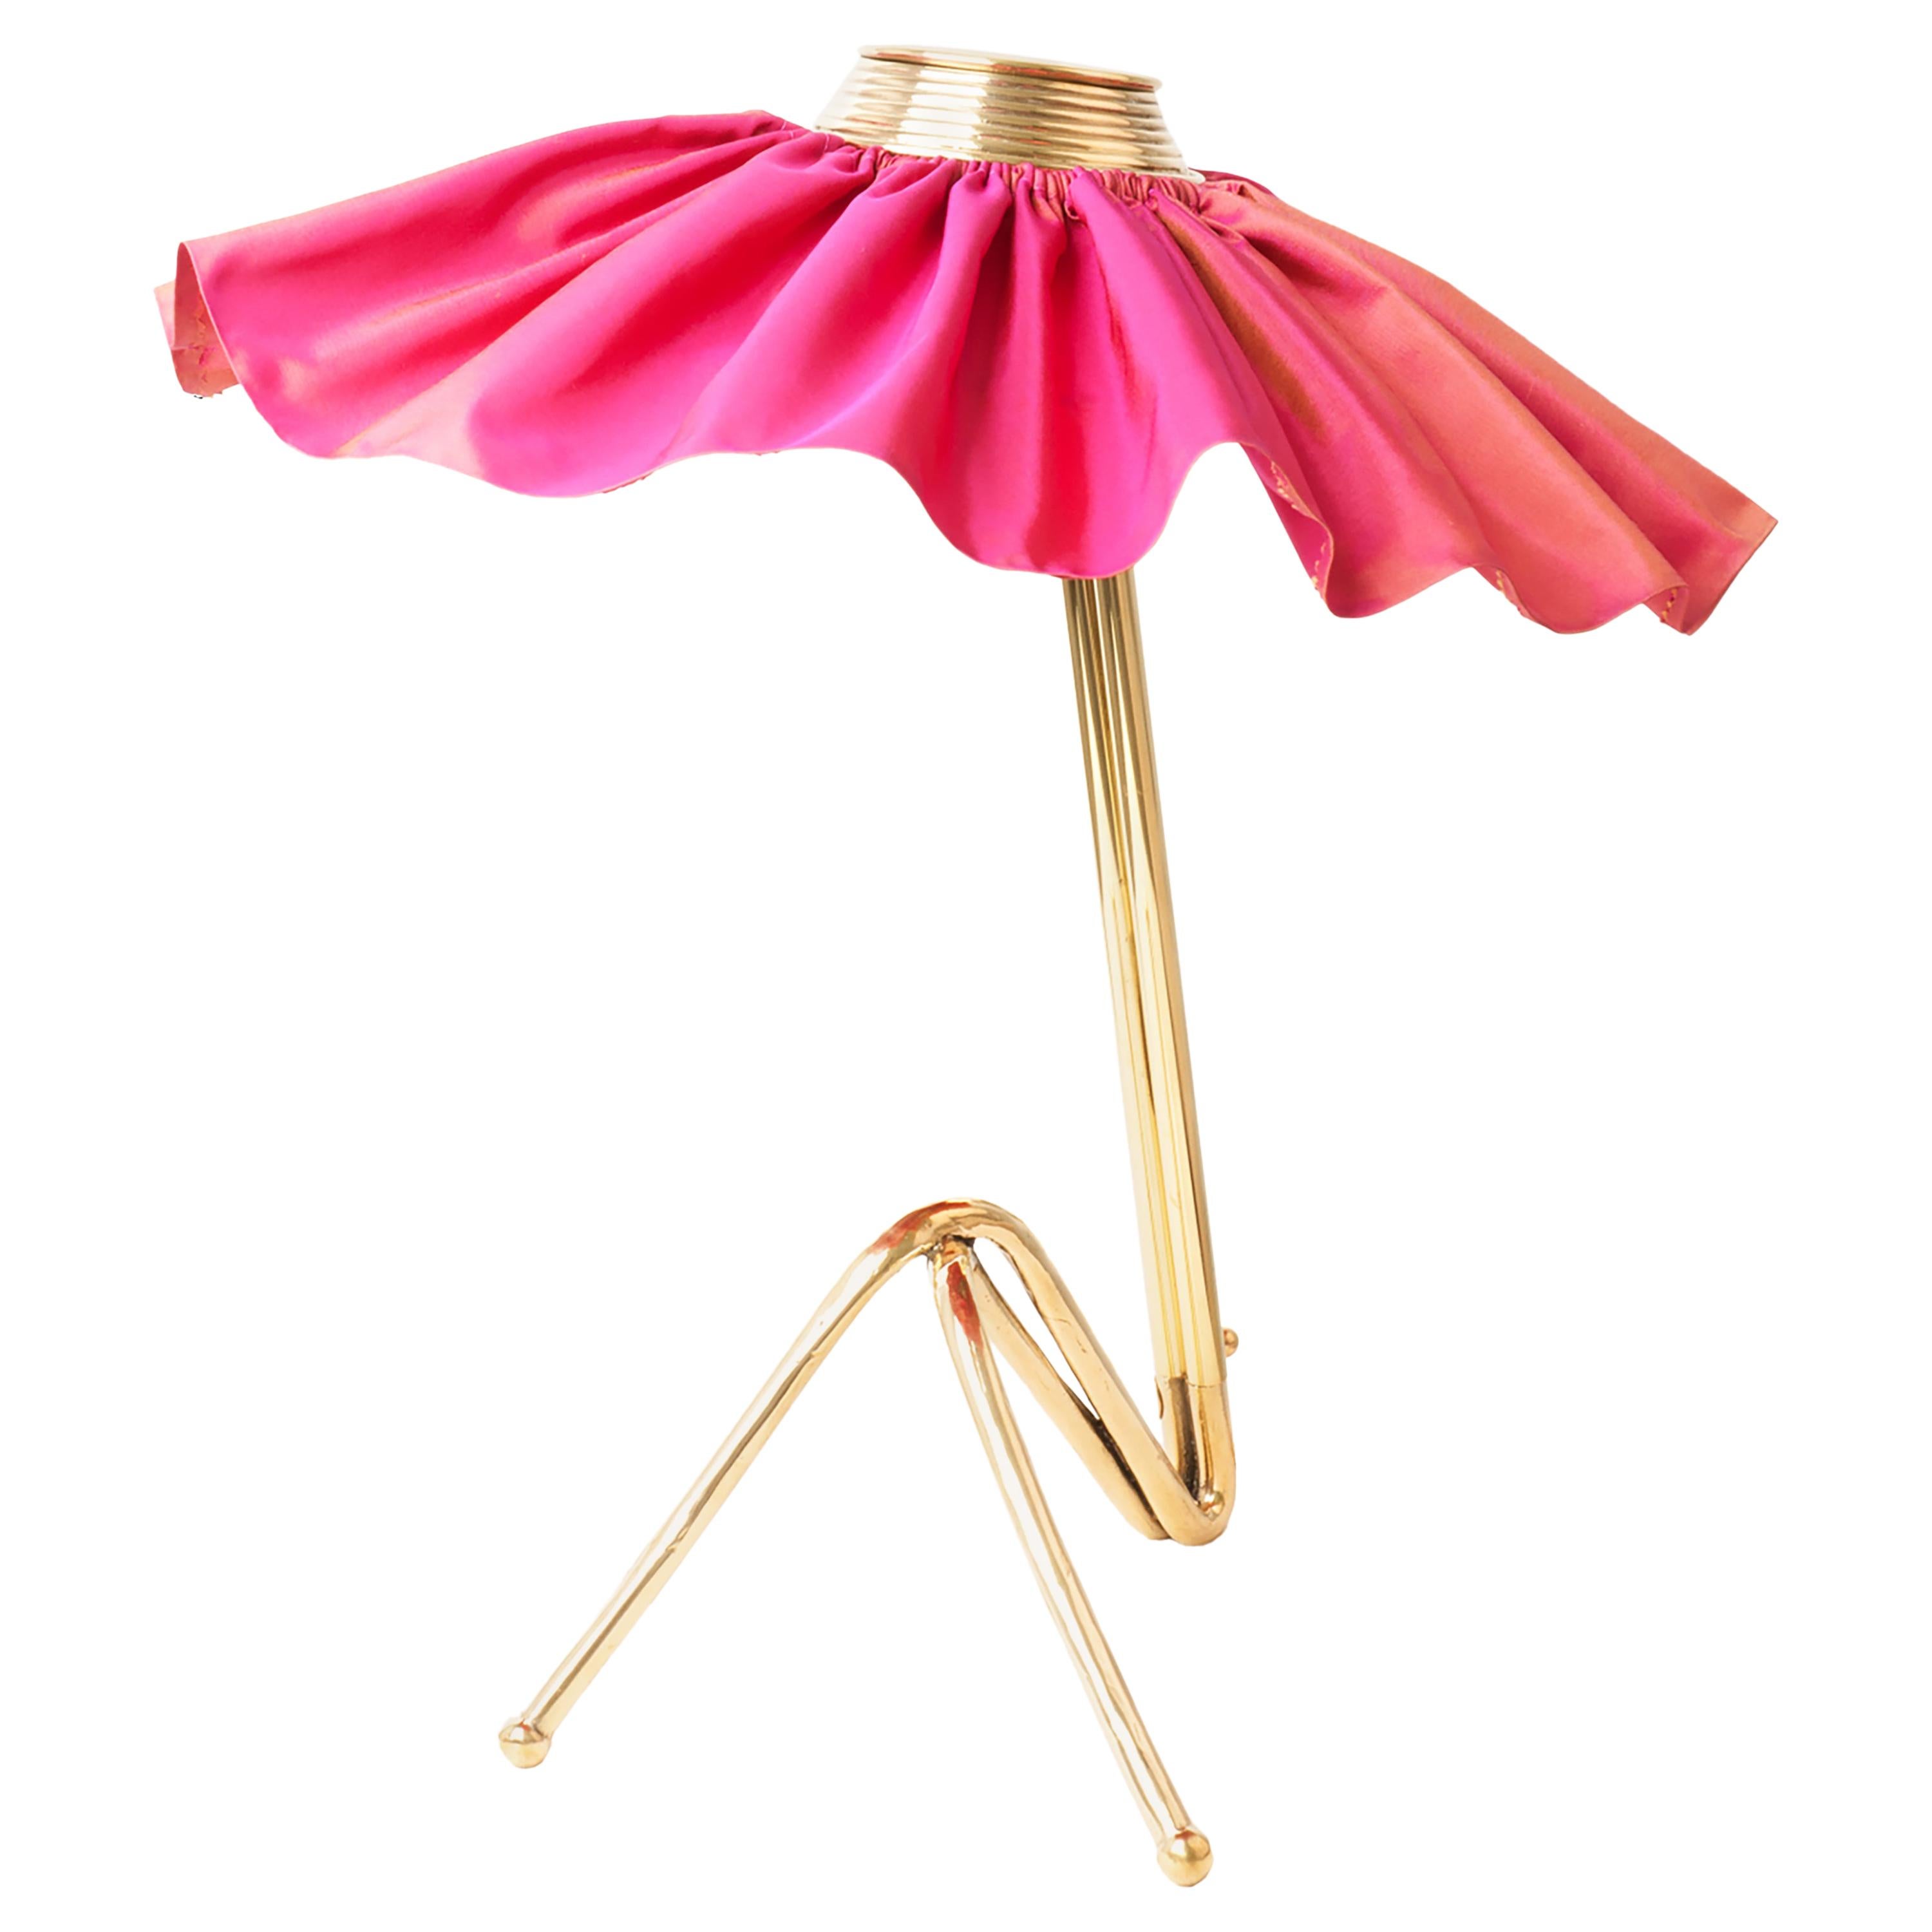 "Freevolle" Sculpture Table Lamp, Cast Brass Body, Rose Taffeta Skirt